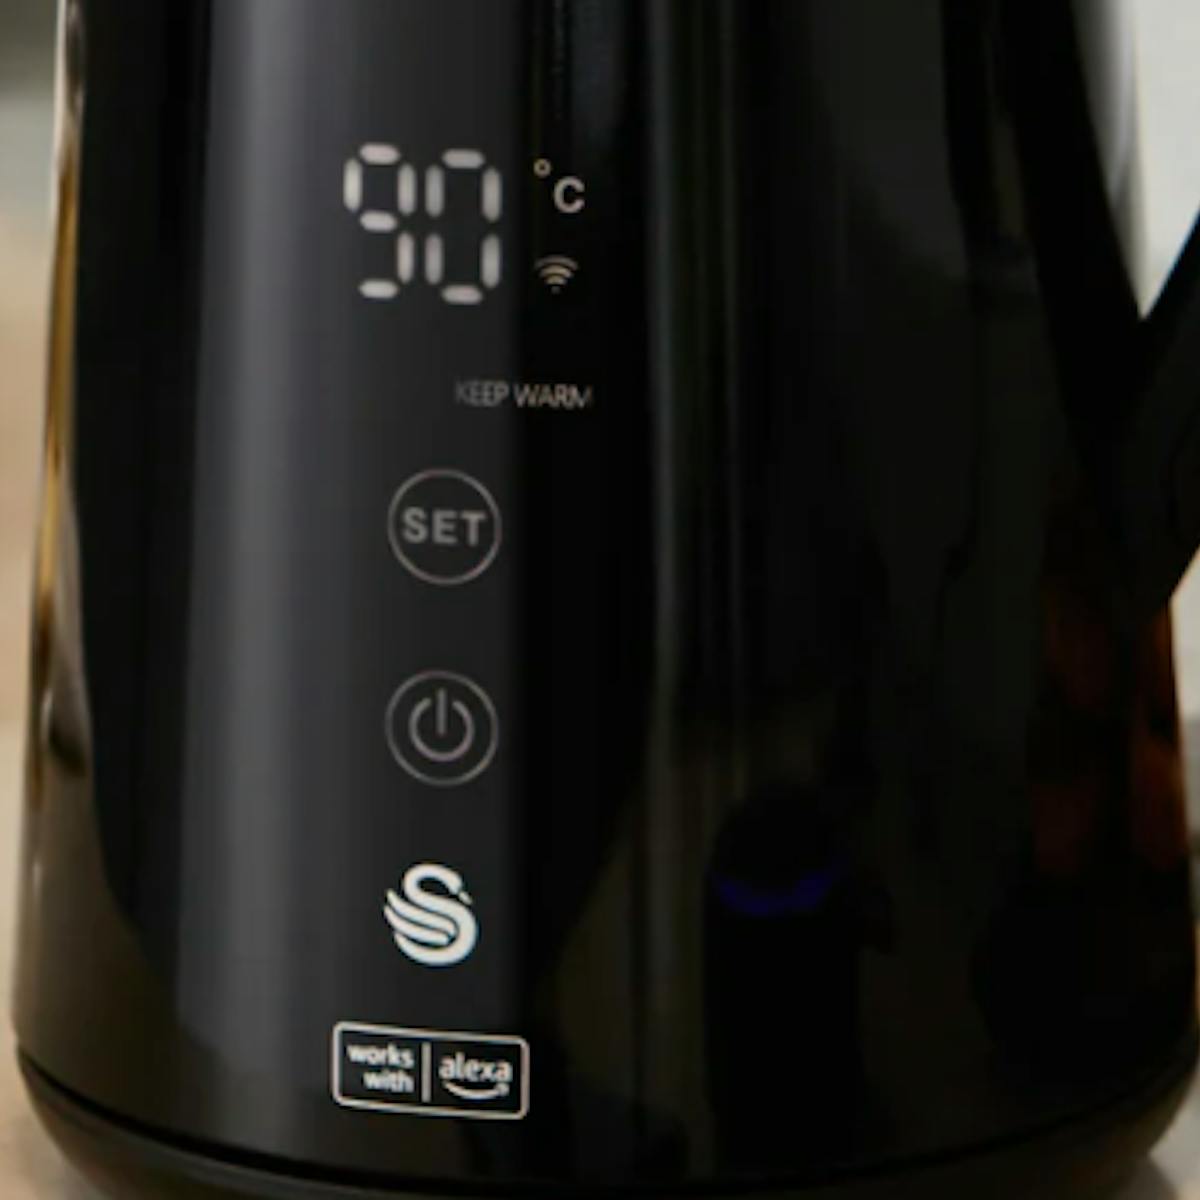 Swan Alexa Smart Kettle review: Alexa, it's tea time